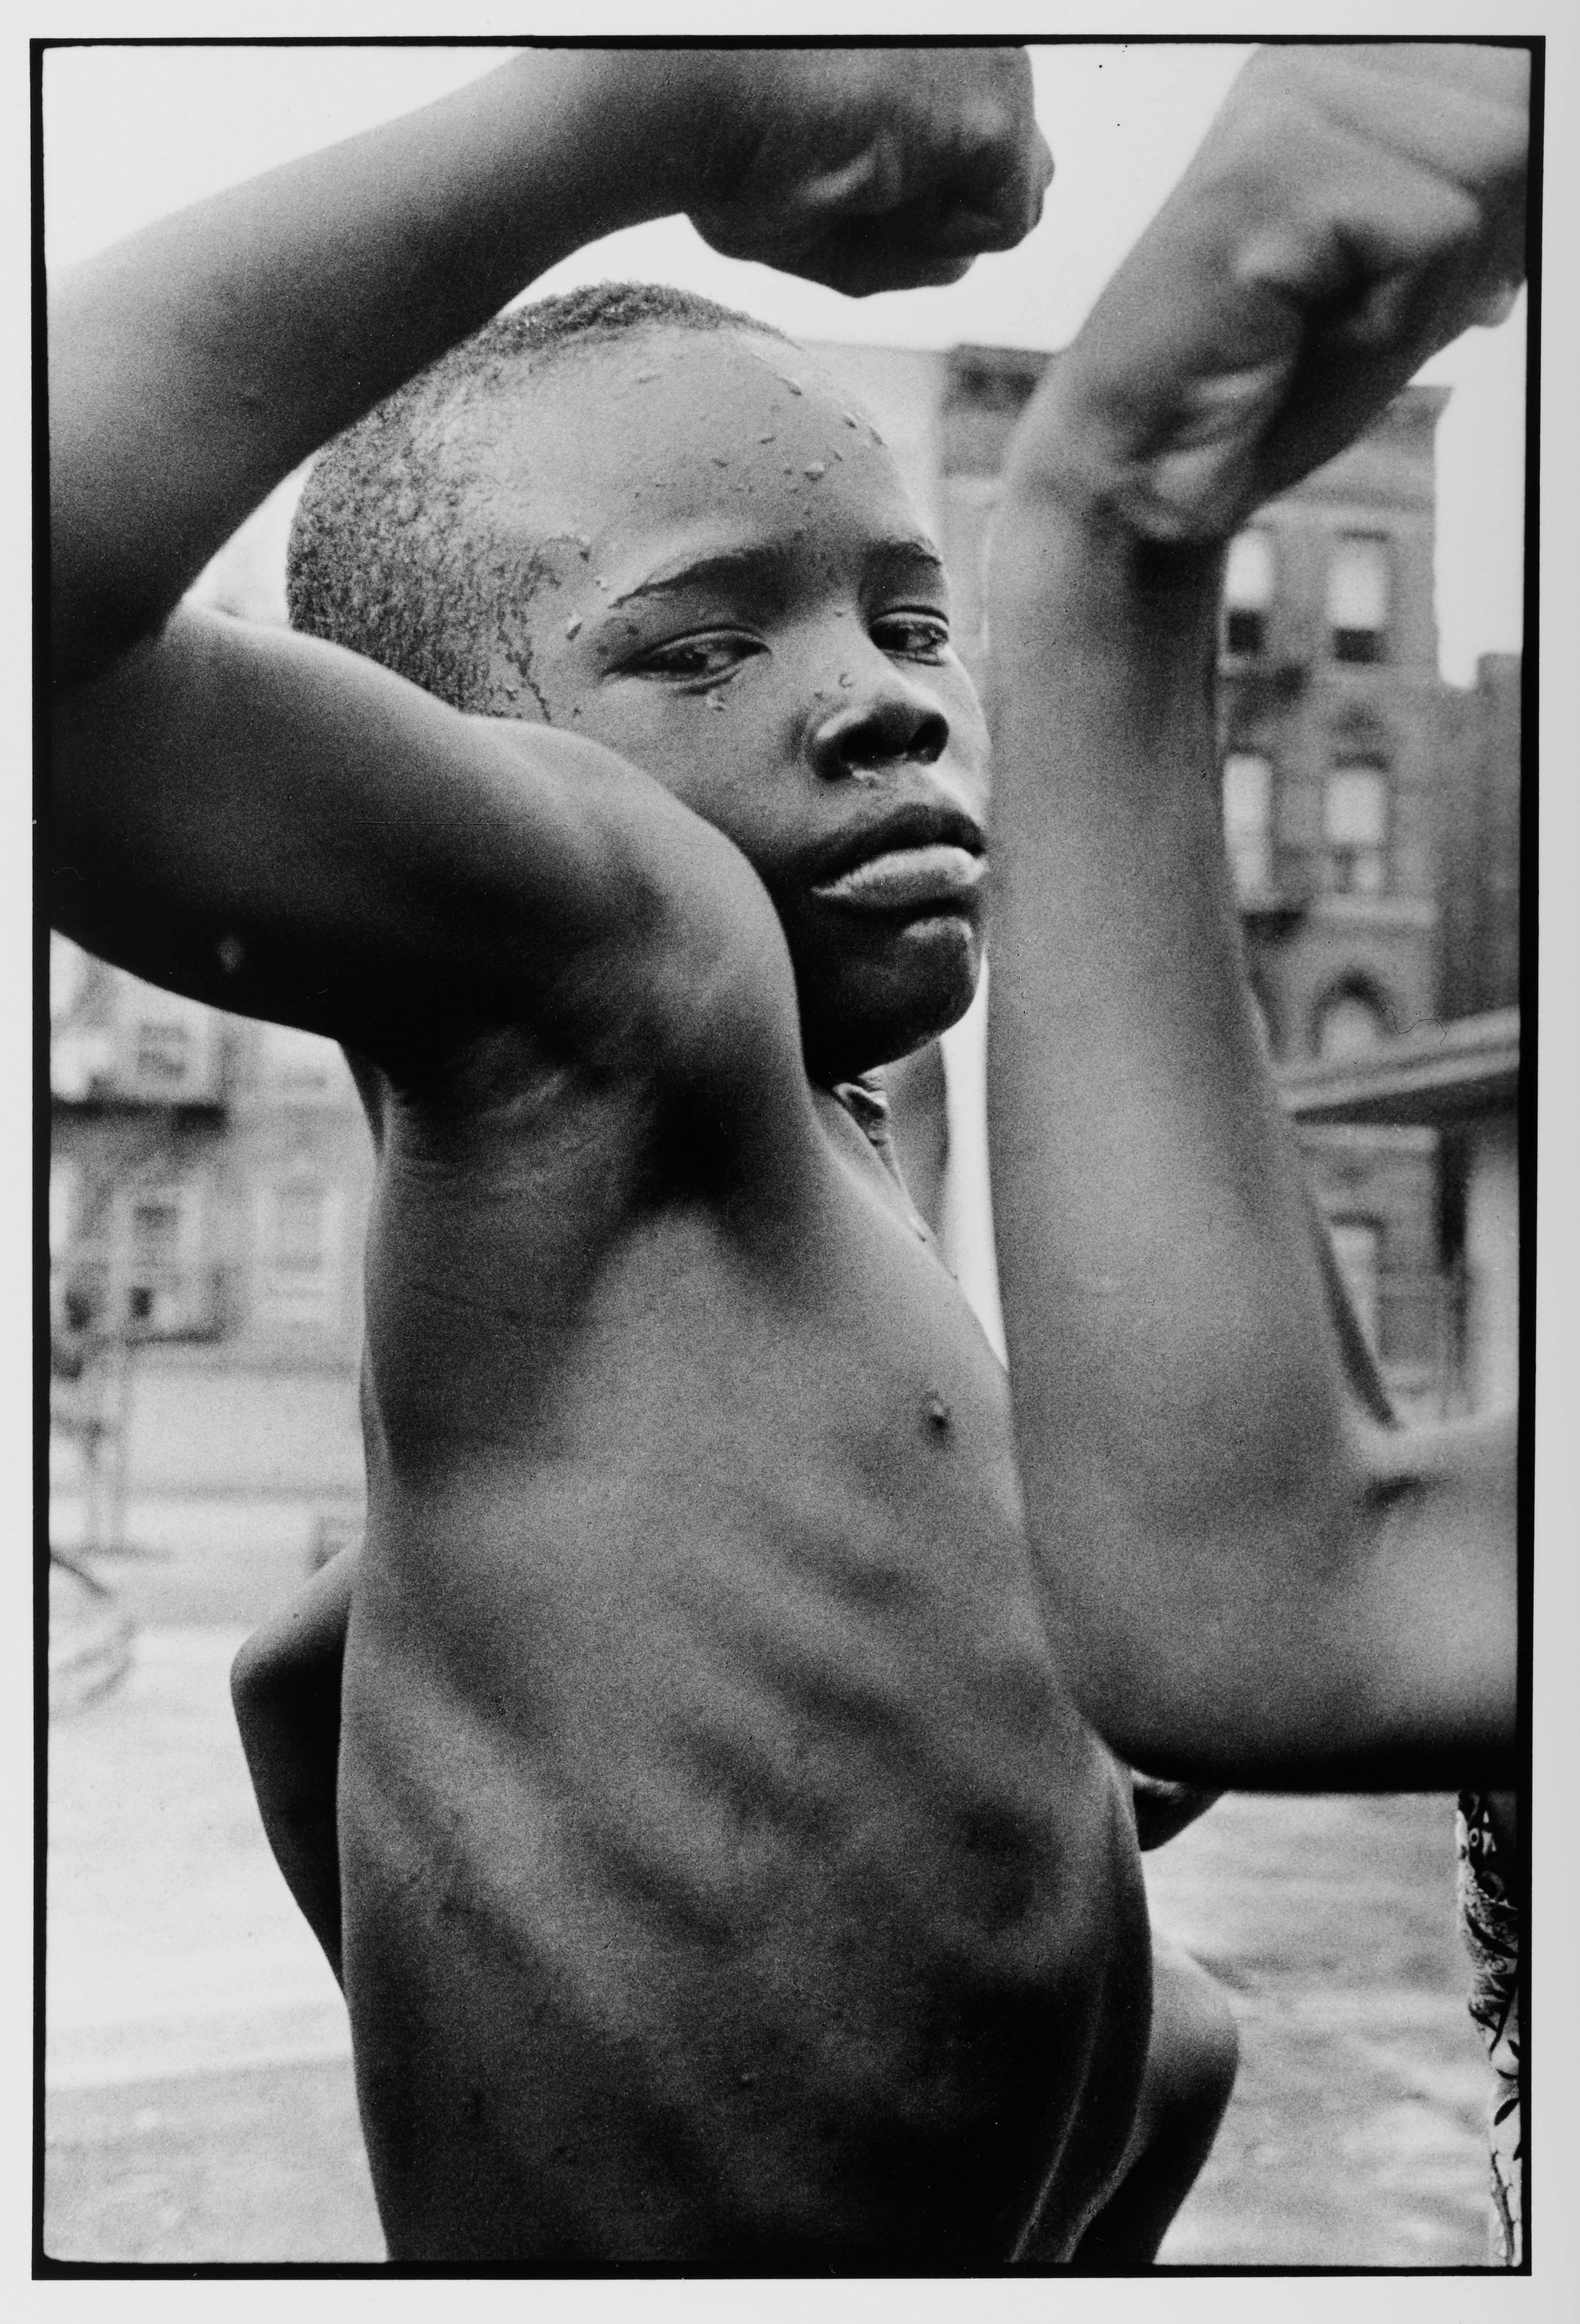 Leonard Freed Black and White Photograph - Harlem NYC Muscle Boy